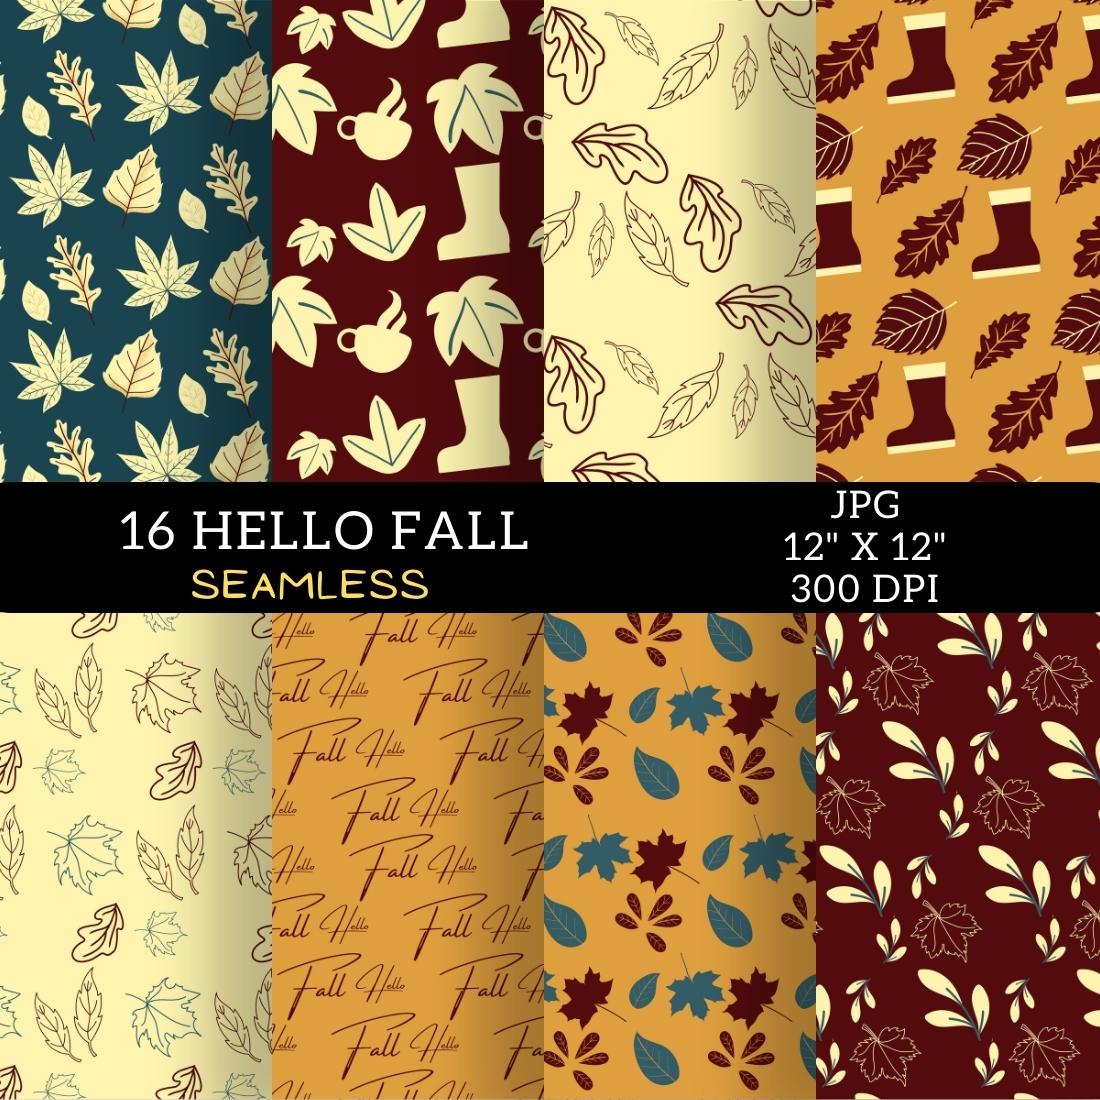 Bundle of wonderful background patterns on the theme of autumn.